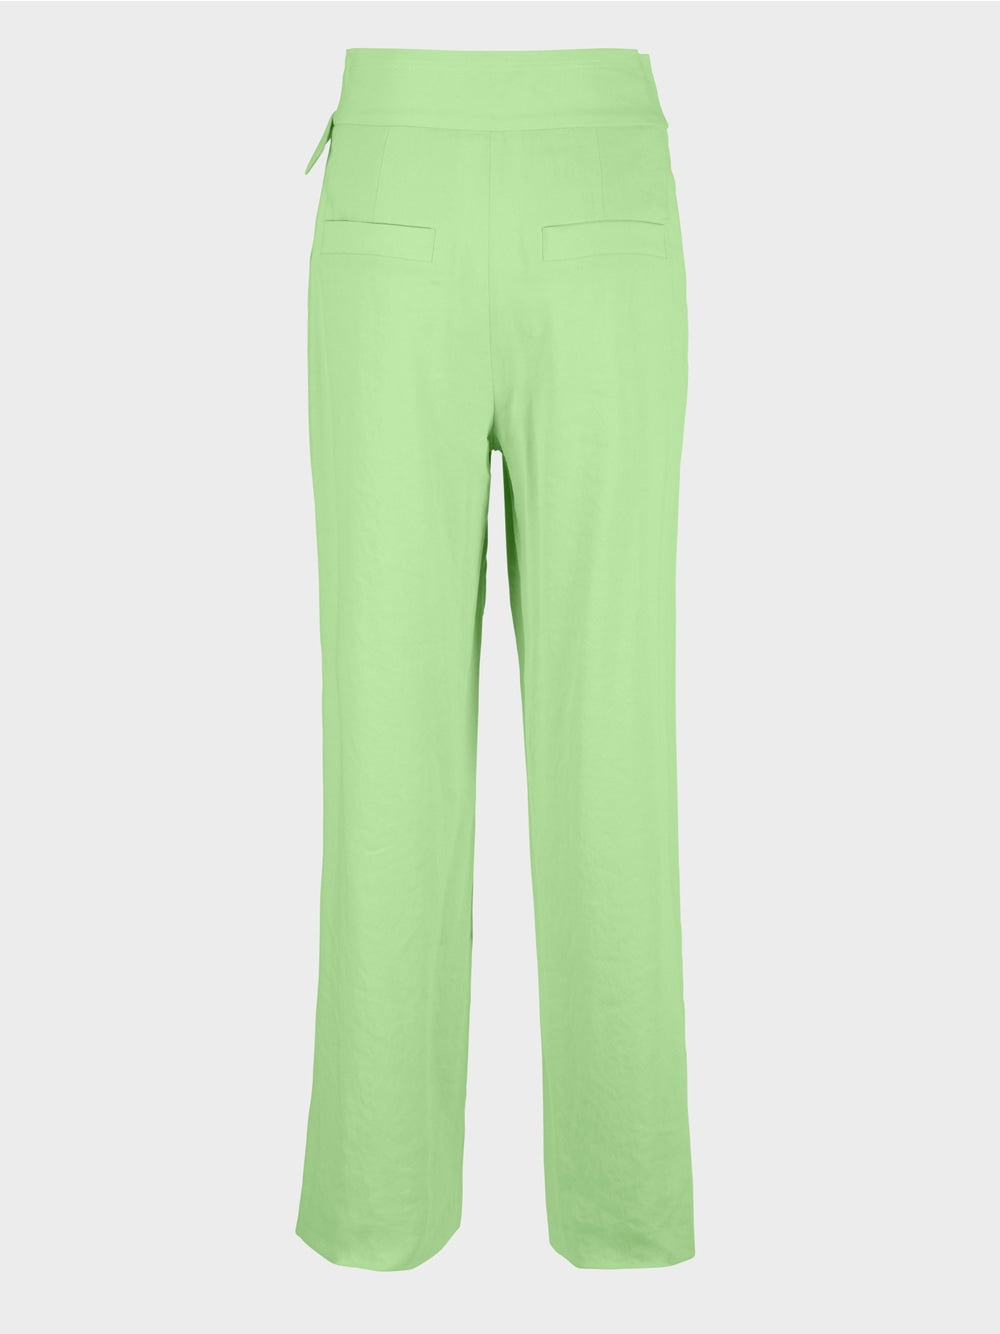 Marc Cain Light Apple Green Model WICHITA - paperbag-style pants